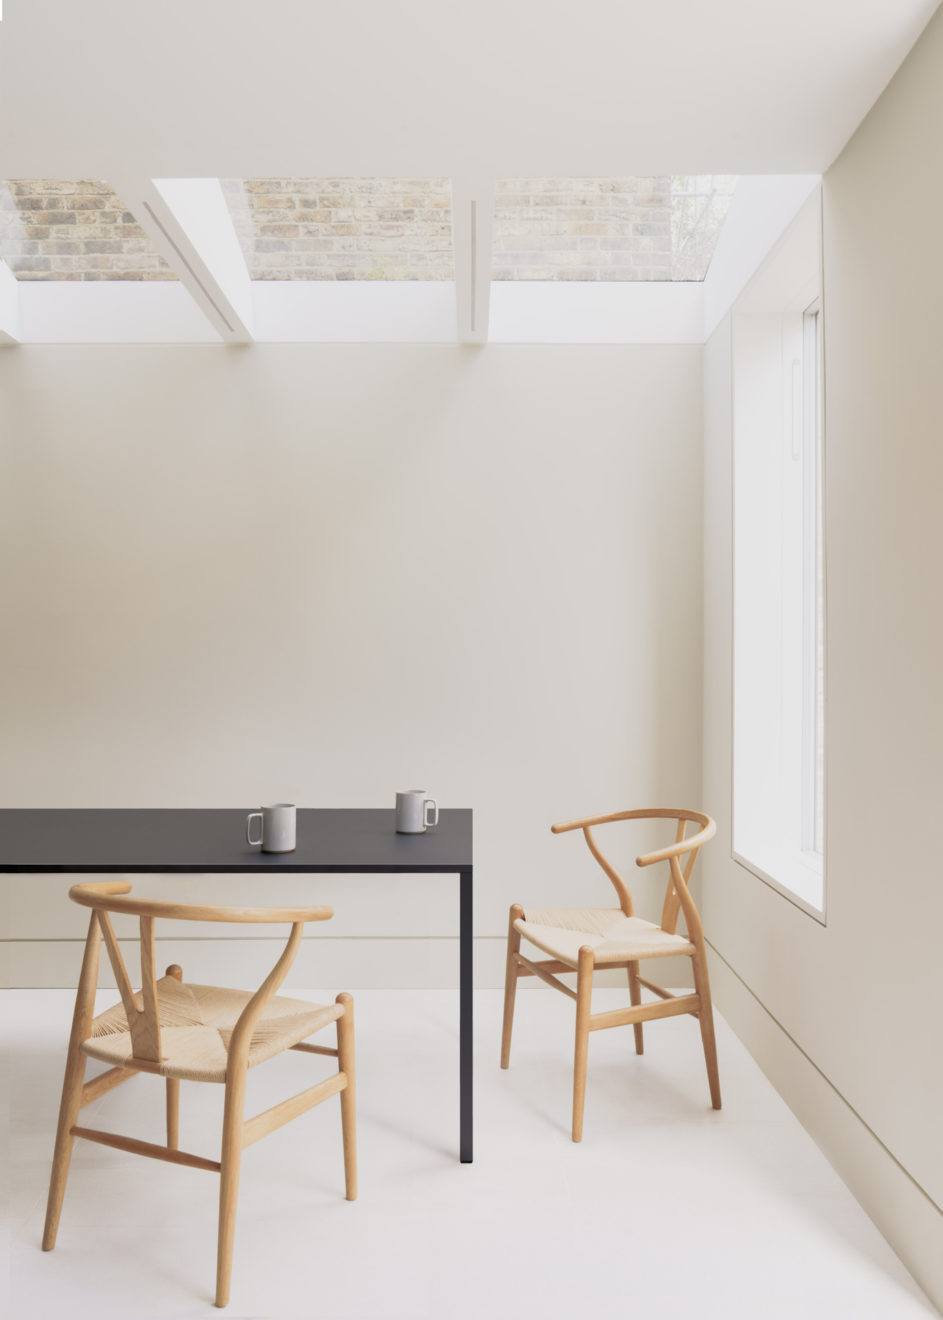 Kylemore Road - Oliver Leech Architects - Aucoot Estate Agent - Nick Dearden